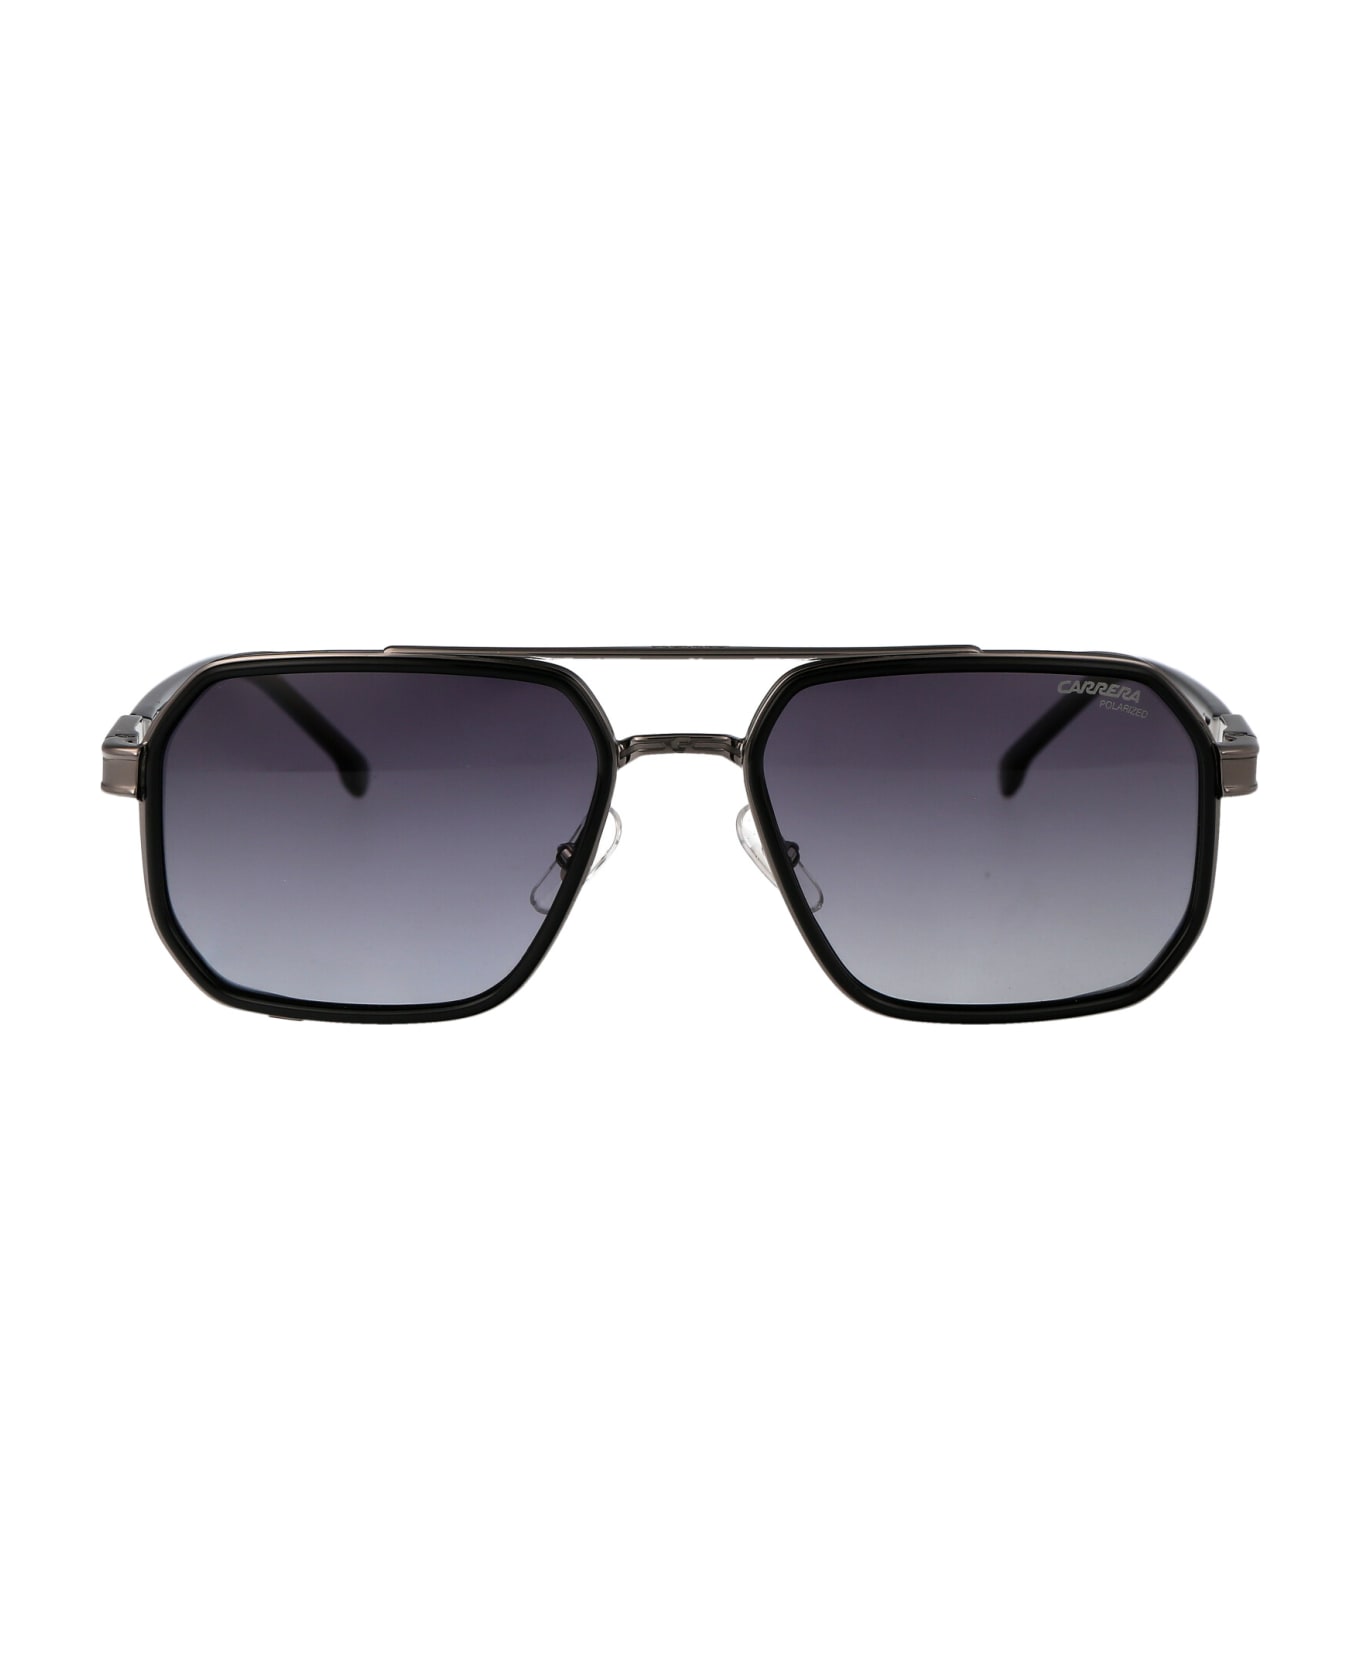 Carrera 1069/s Sunglasses - ANSWJ BLK DKRUT